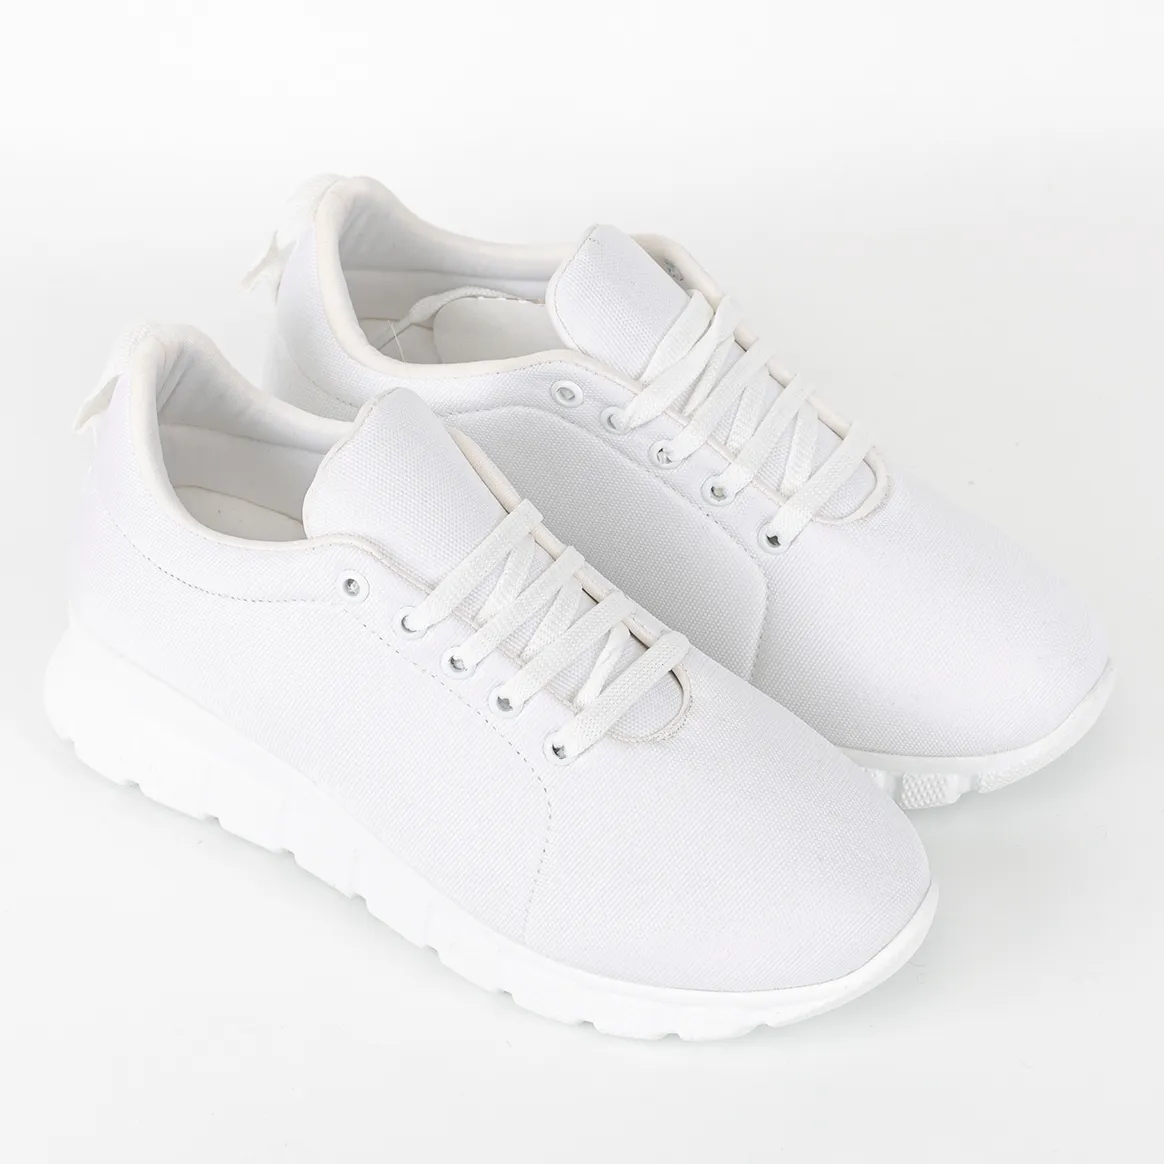 Branco Medical Canvas Sneakers Mulheres Nursing Shoe Nurse Shoe Slipper Anatomic Premium Quality da Turquia